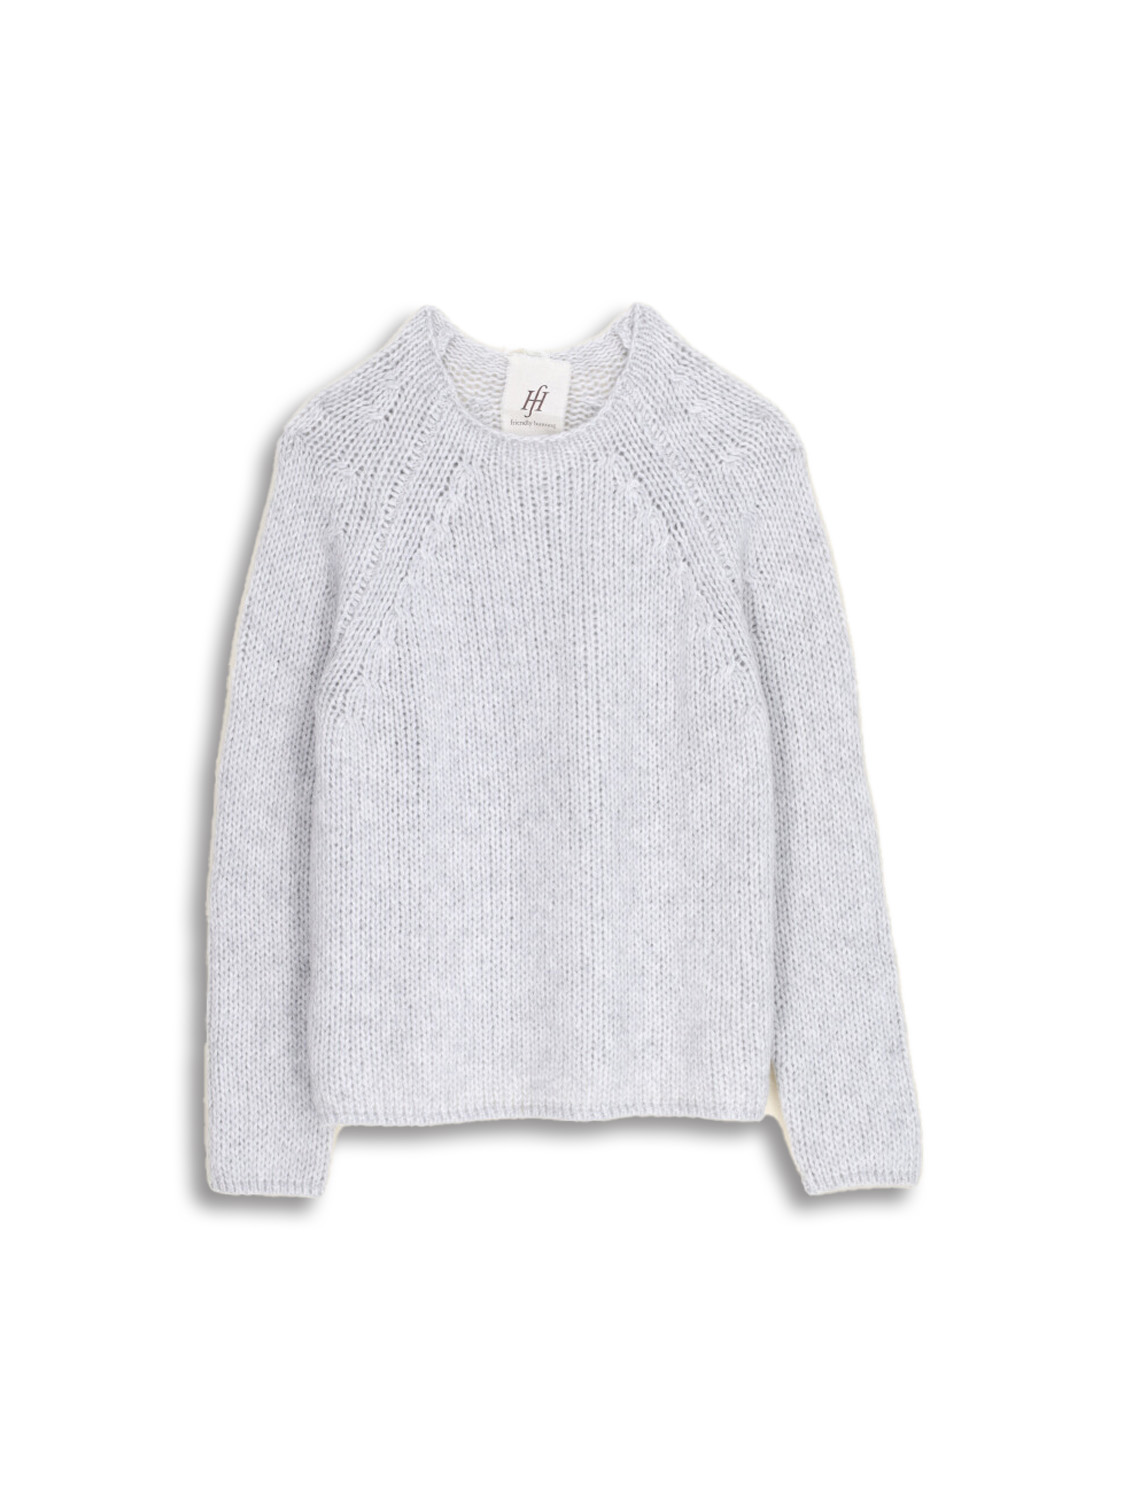 Jumper styles Bodhi - cashmere cotton blend knit sweater